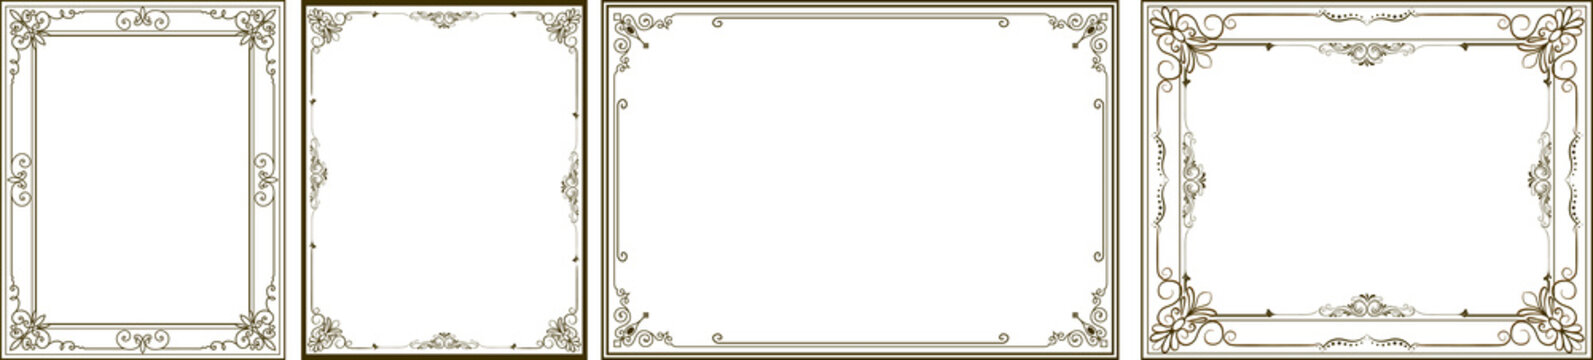 Vector set of gold decorative horizontal floral elements, corners, borders, frame